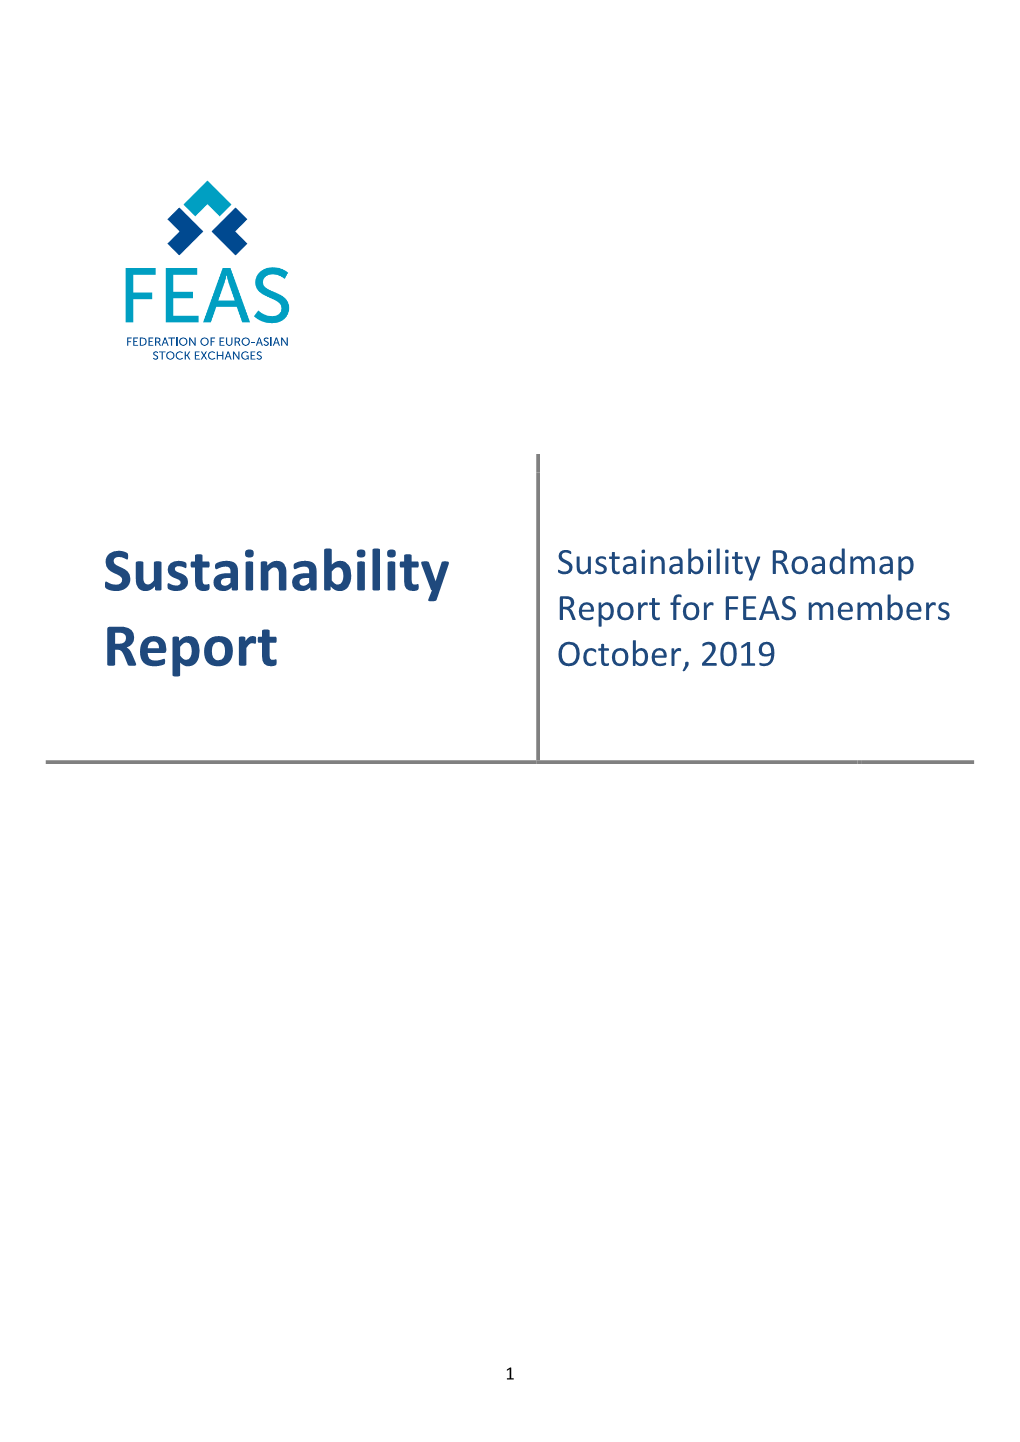 Sustainability Roadmap Report for FEAS Members October, 2019